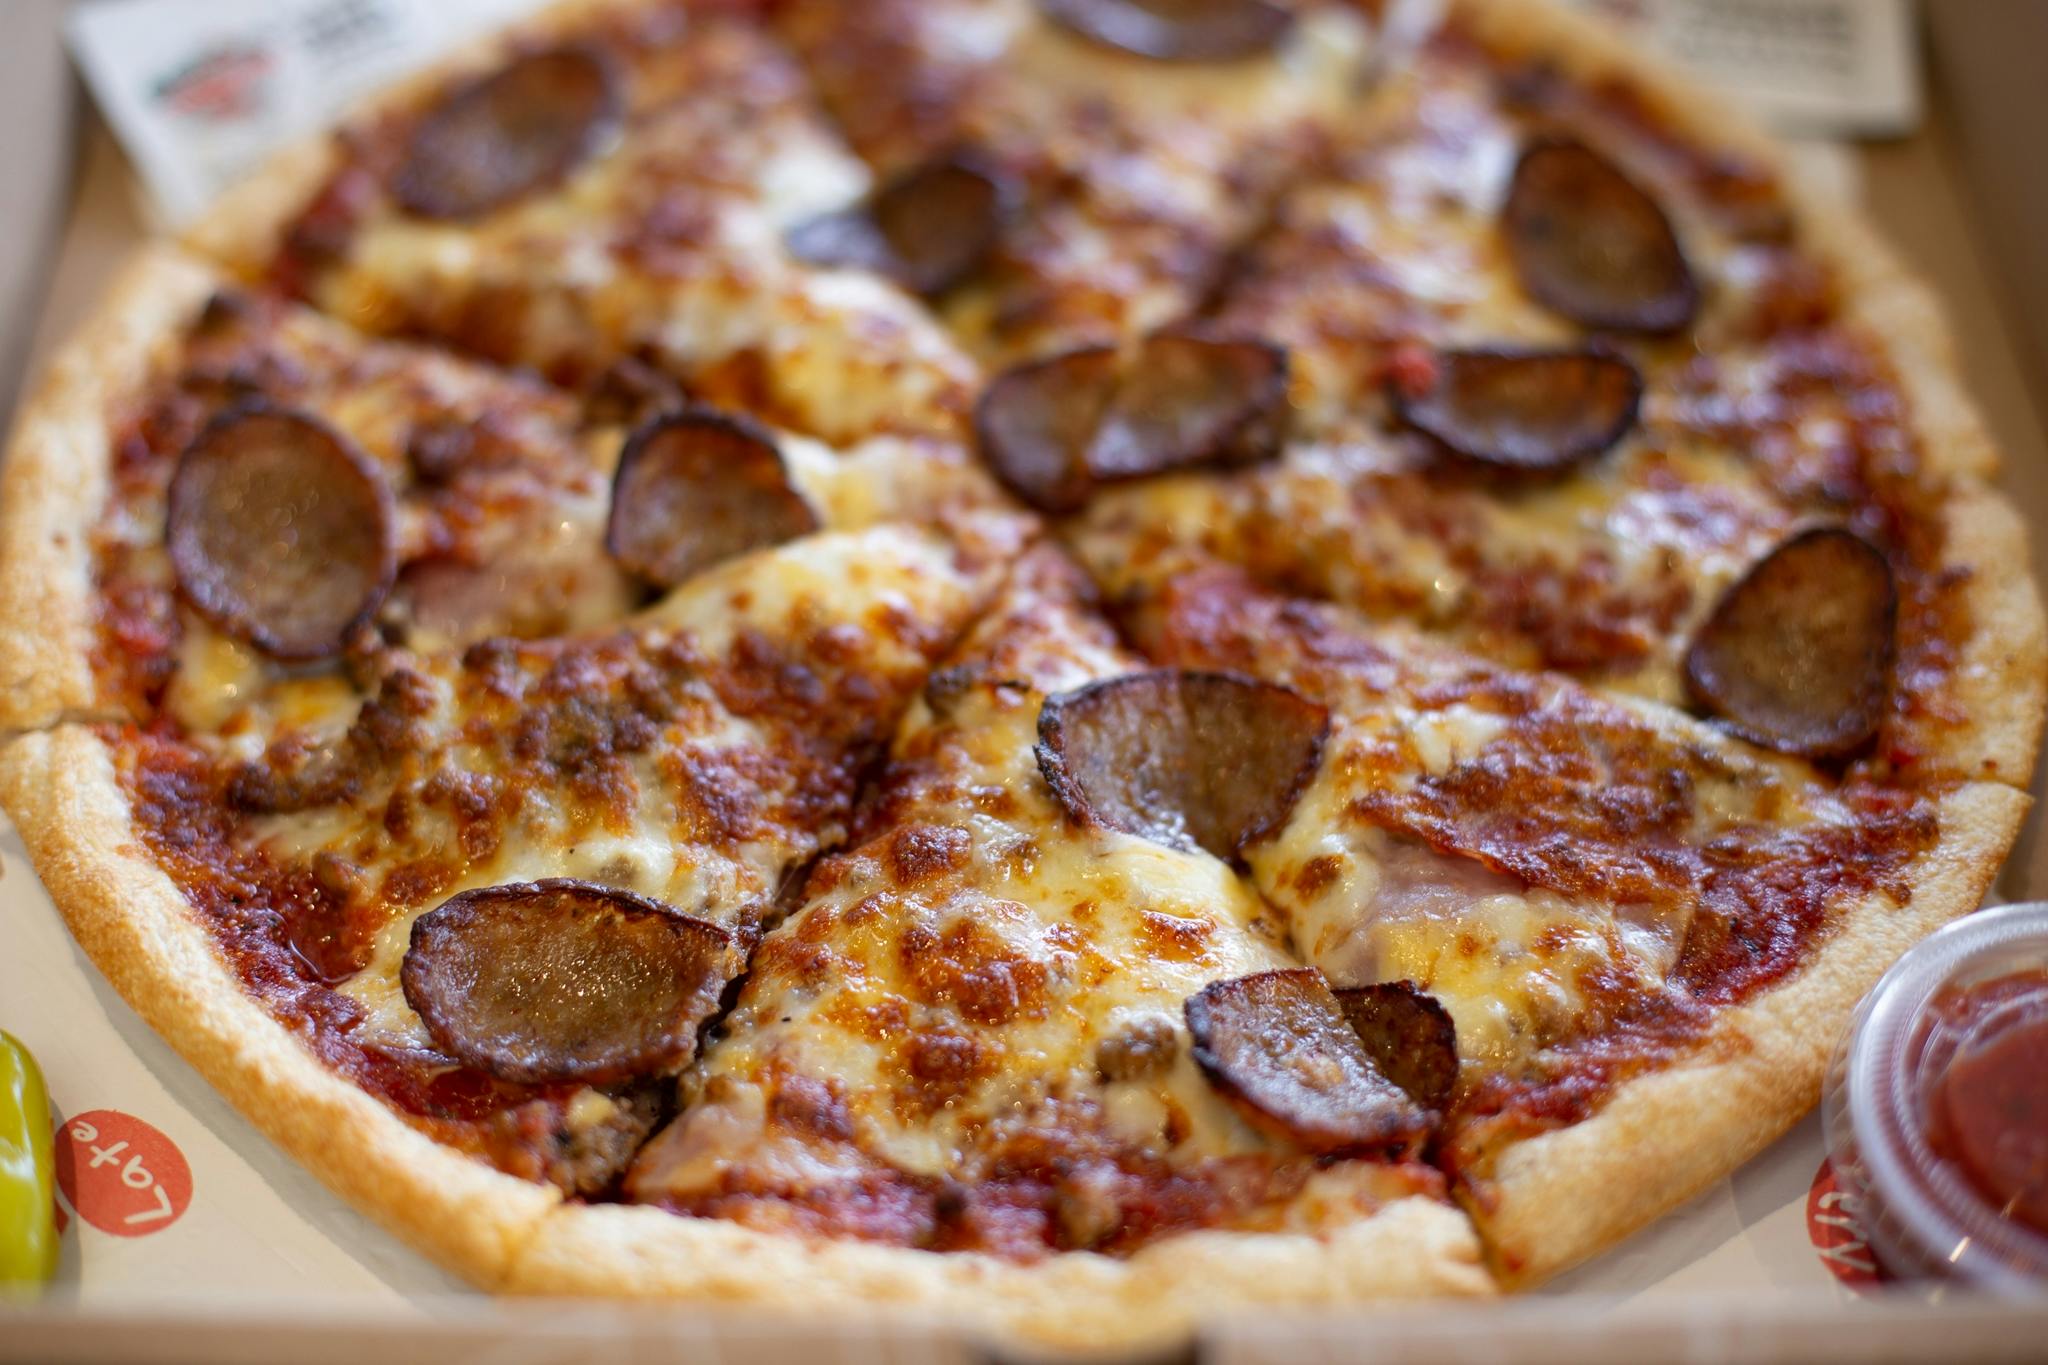 New York Deli Pizza from Sarpino's Pizzeria - Braeswood Blvd. in Houston, TX